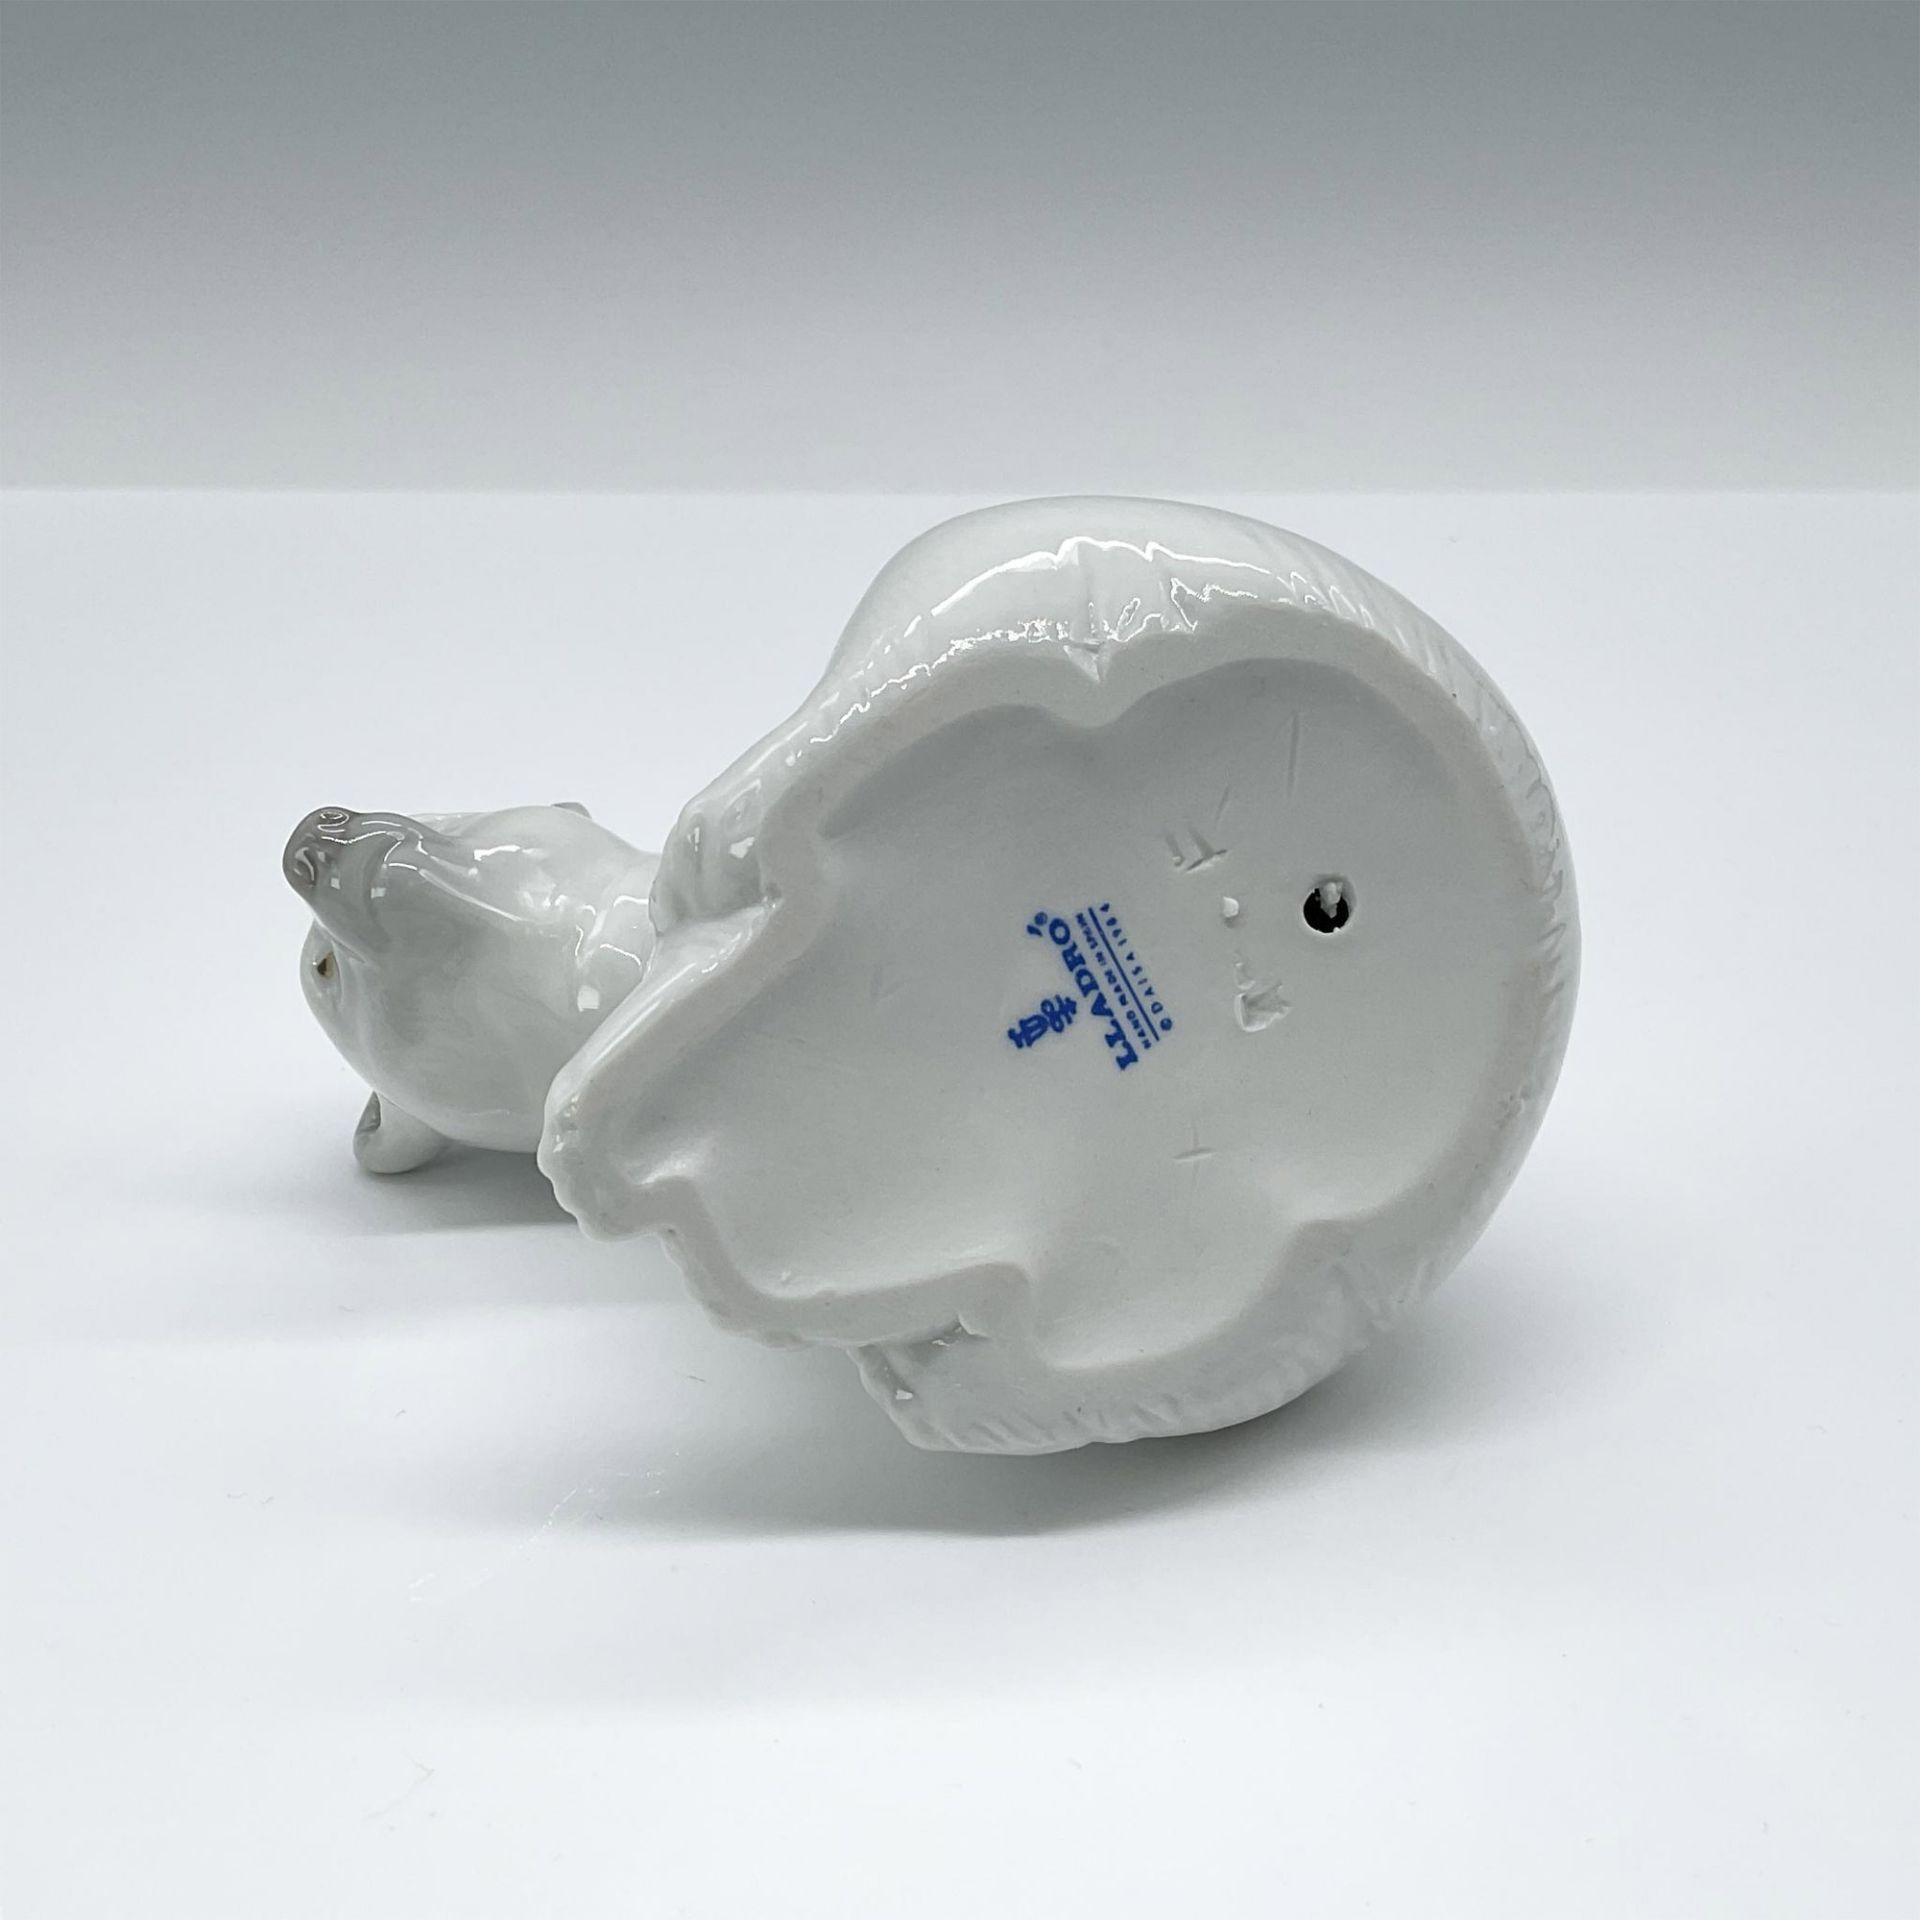 Seated Polar Bear 1001209 - Lladro Porcelain Figurine - Image 3 of 3